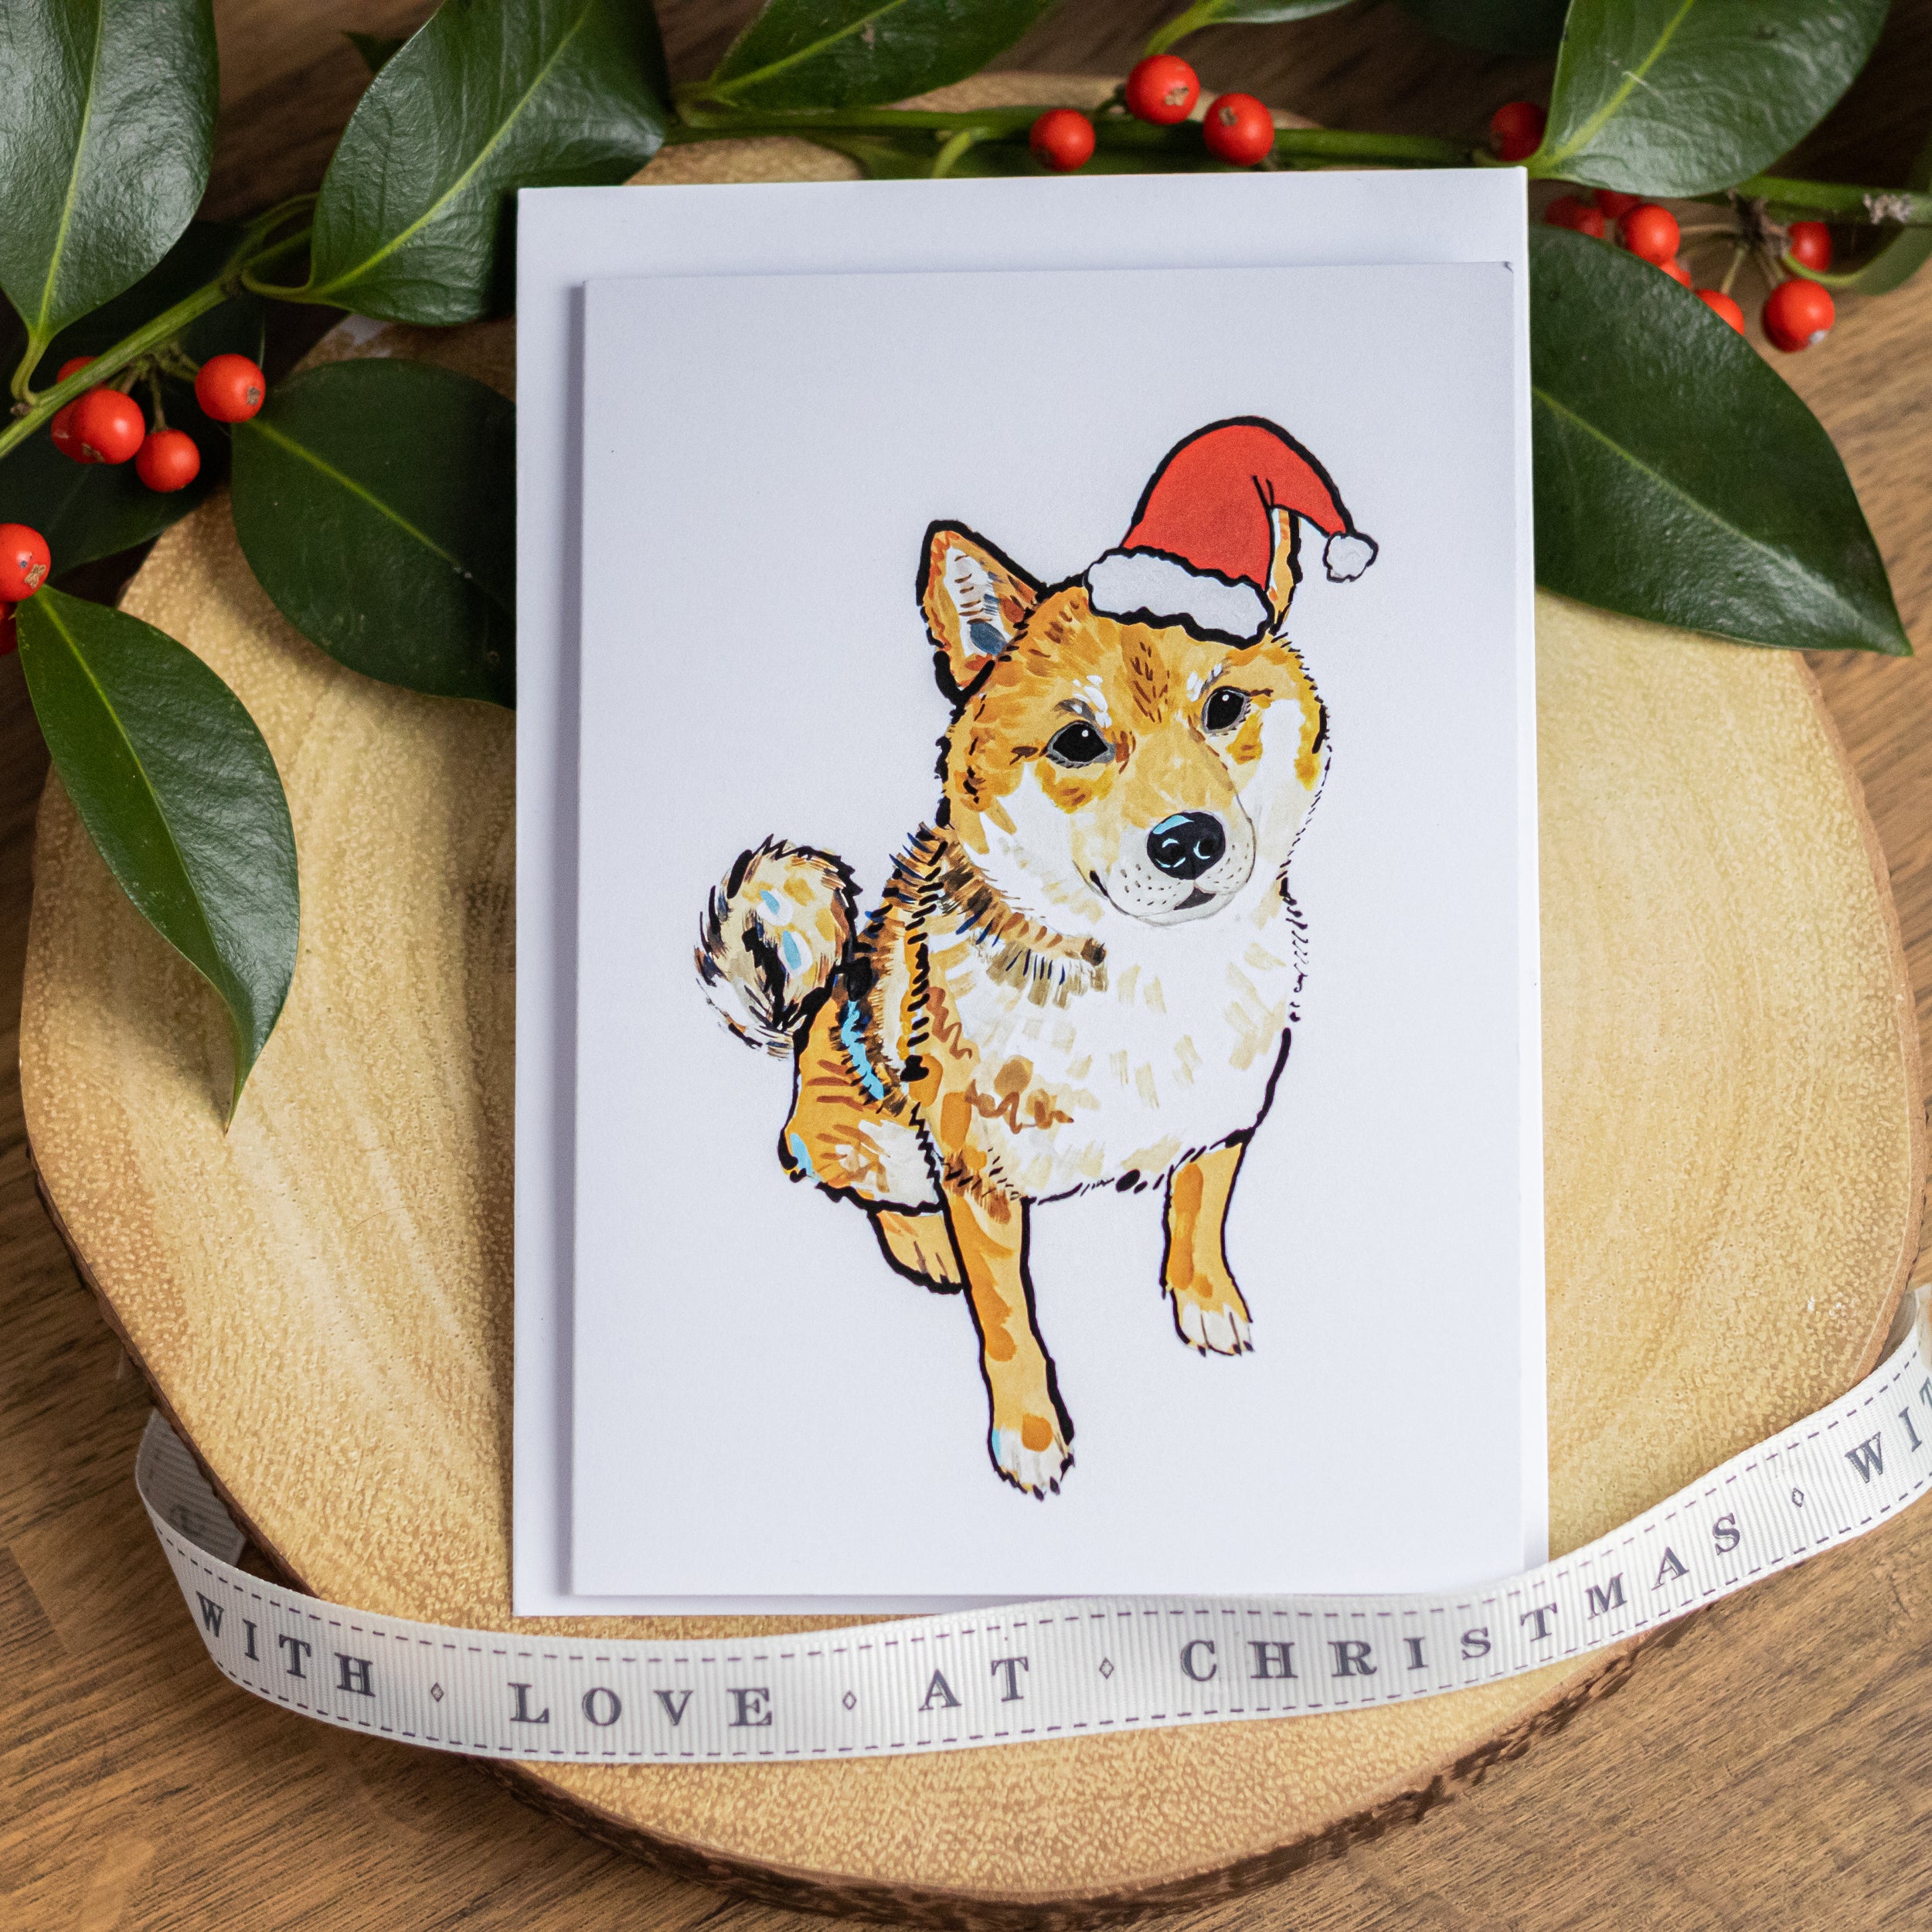 Shiba Inu Christmas Card